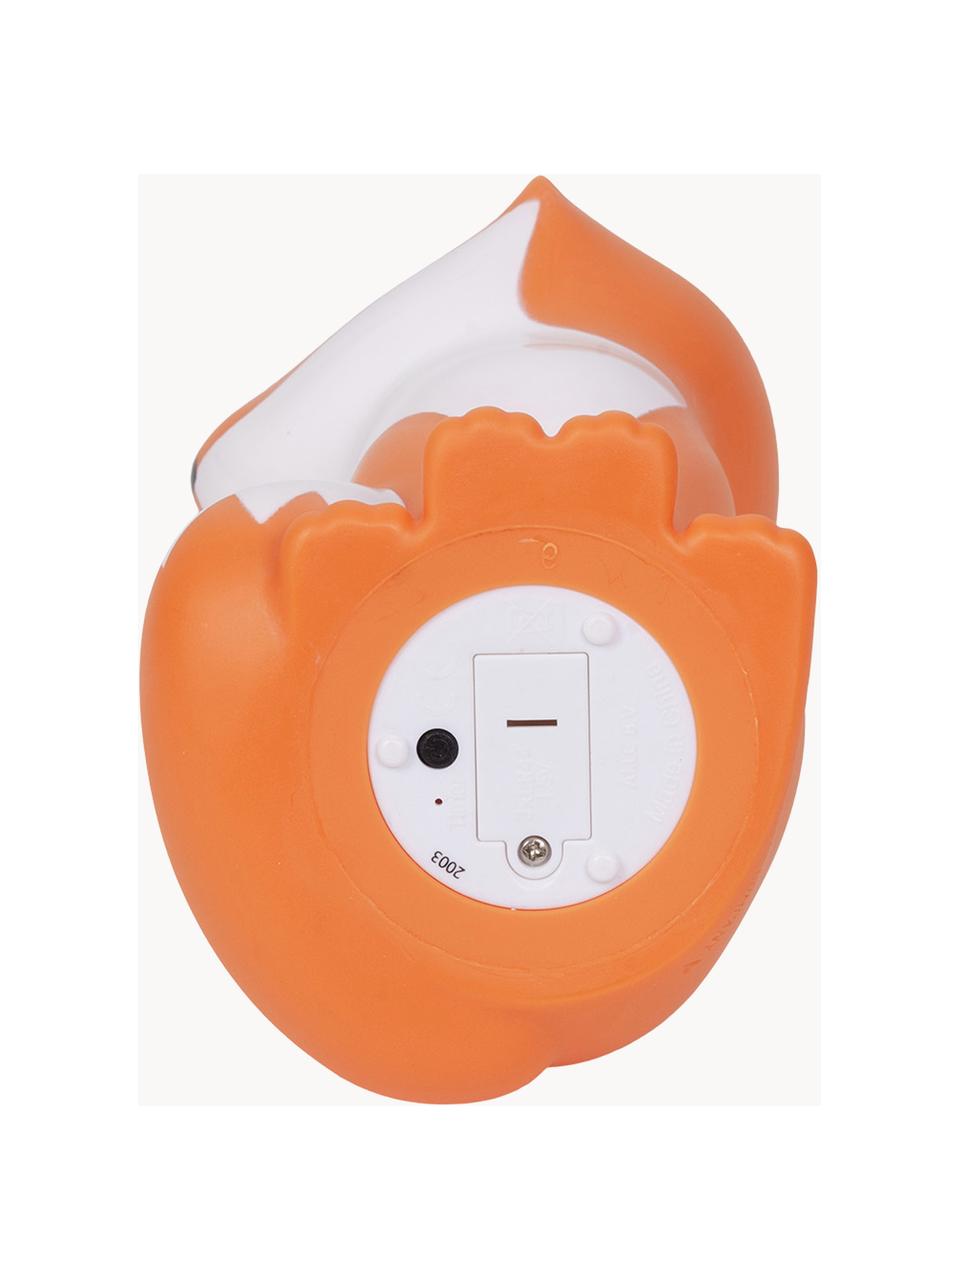 Kinderkamerlamp Fox met timerfunctie, Kunststof, Oranje, wit, B 11 x H 15 cm